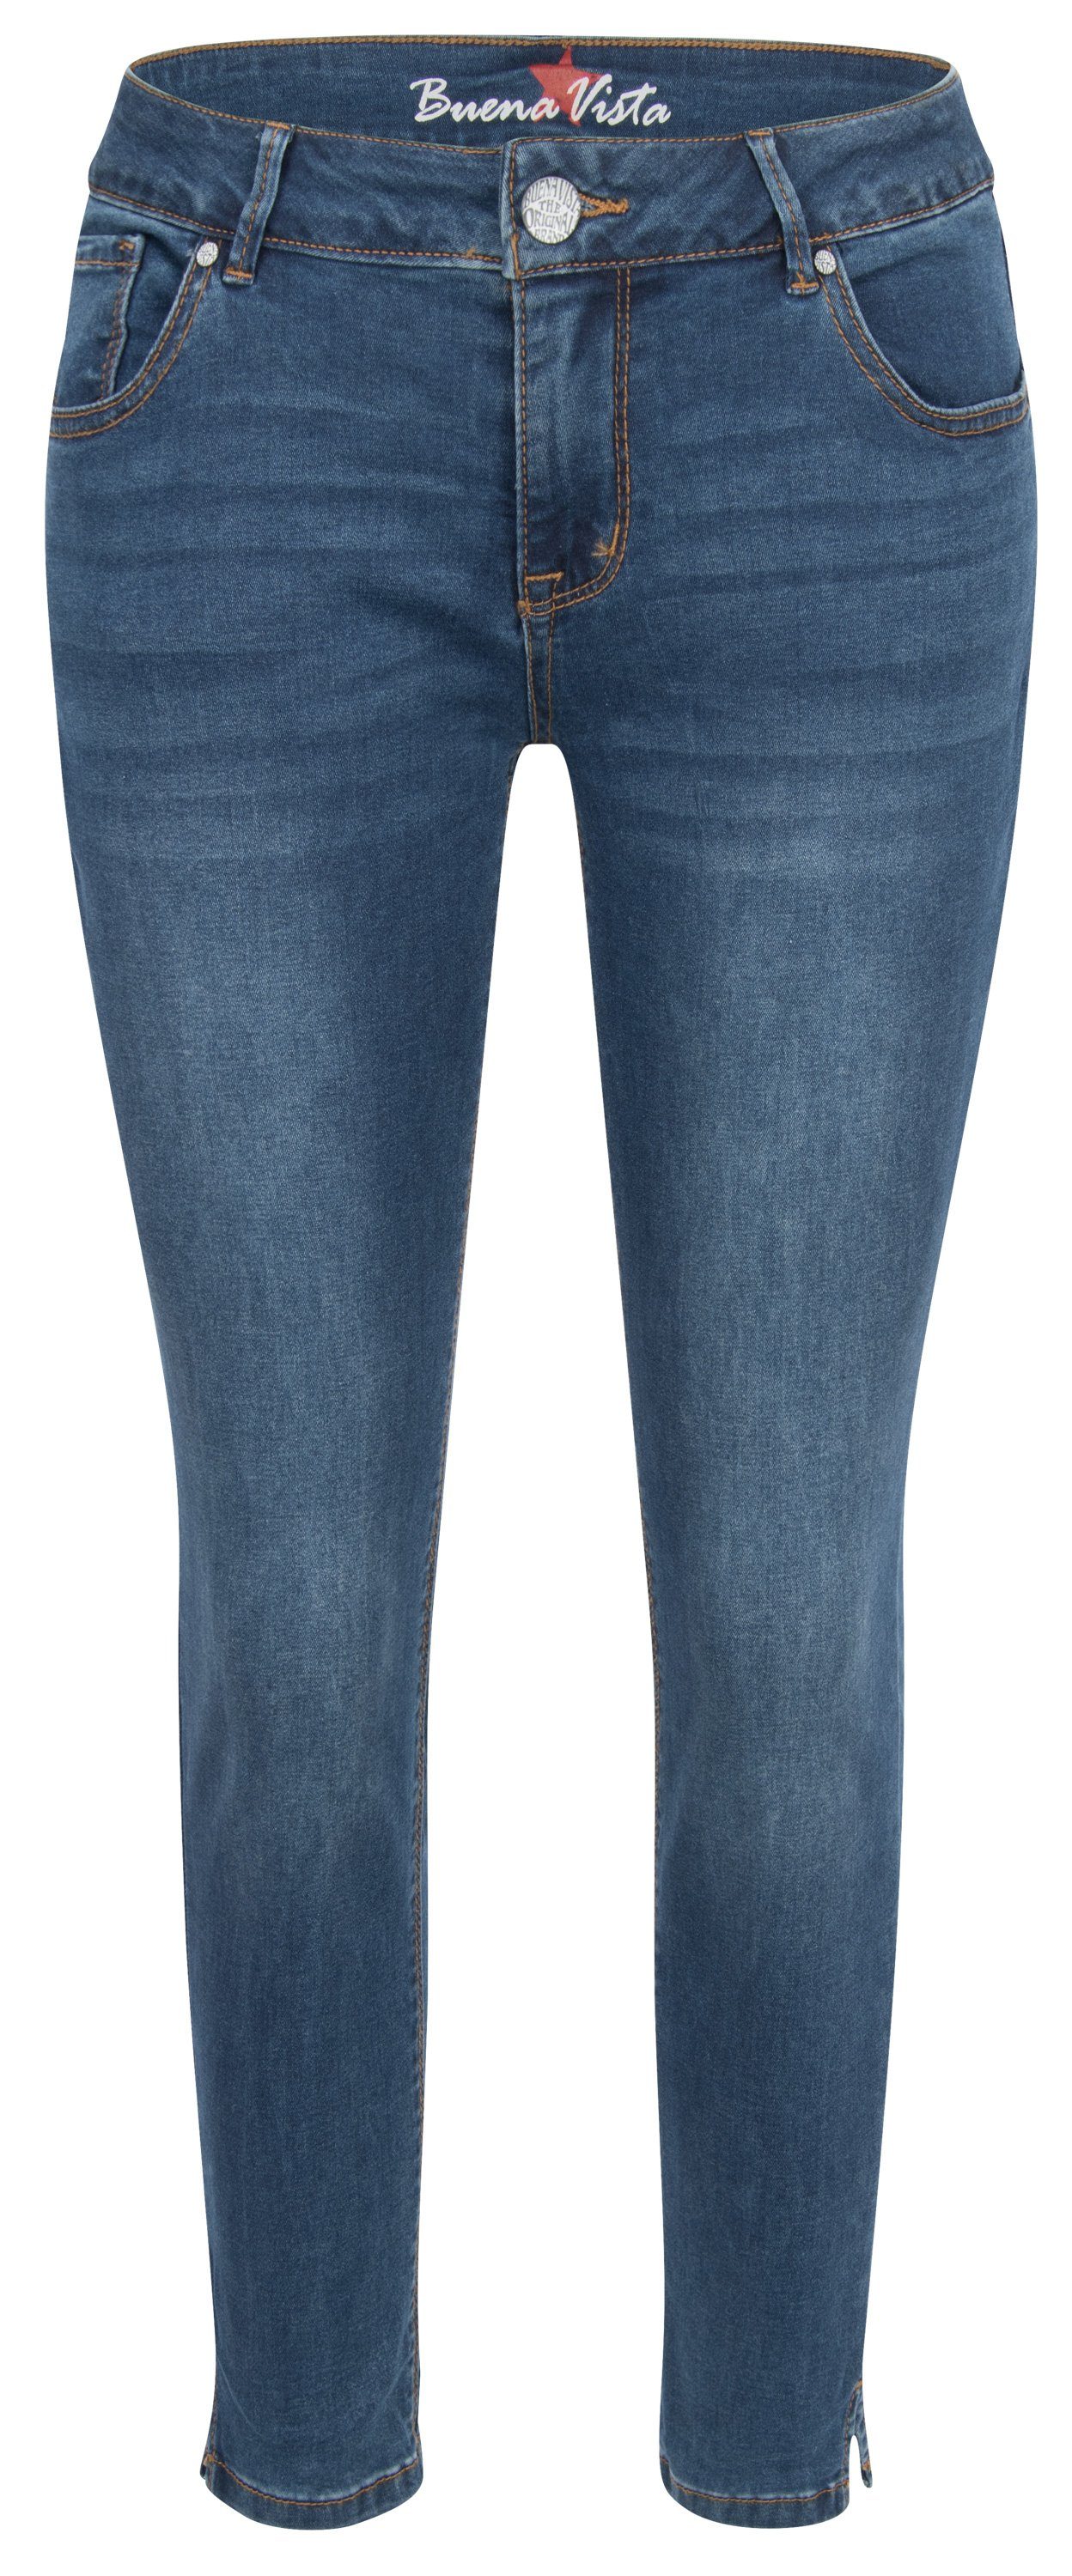 Buena Vista Stretch-Jeans BUENA VISTA ITALY 7/8 middle blue 888 B5281 102.4452 - Cozy Denim | Stretchjeans